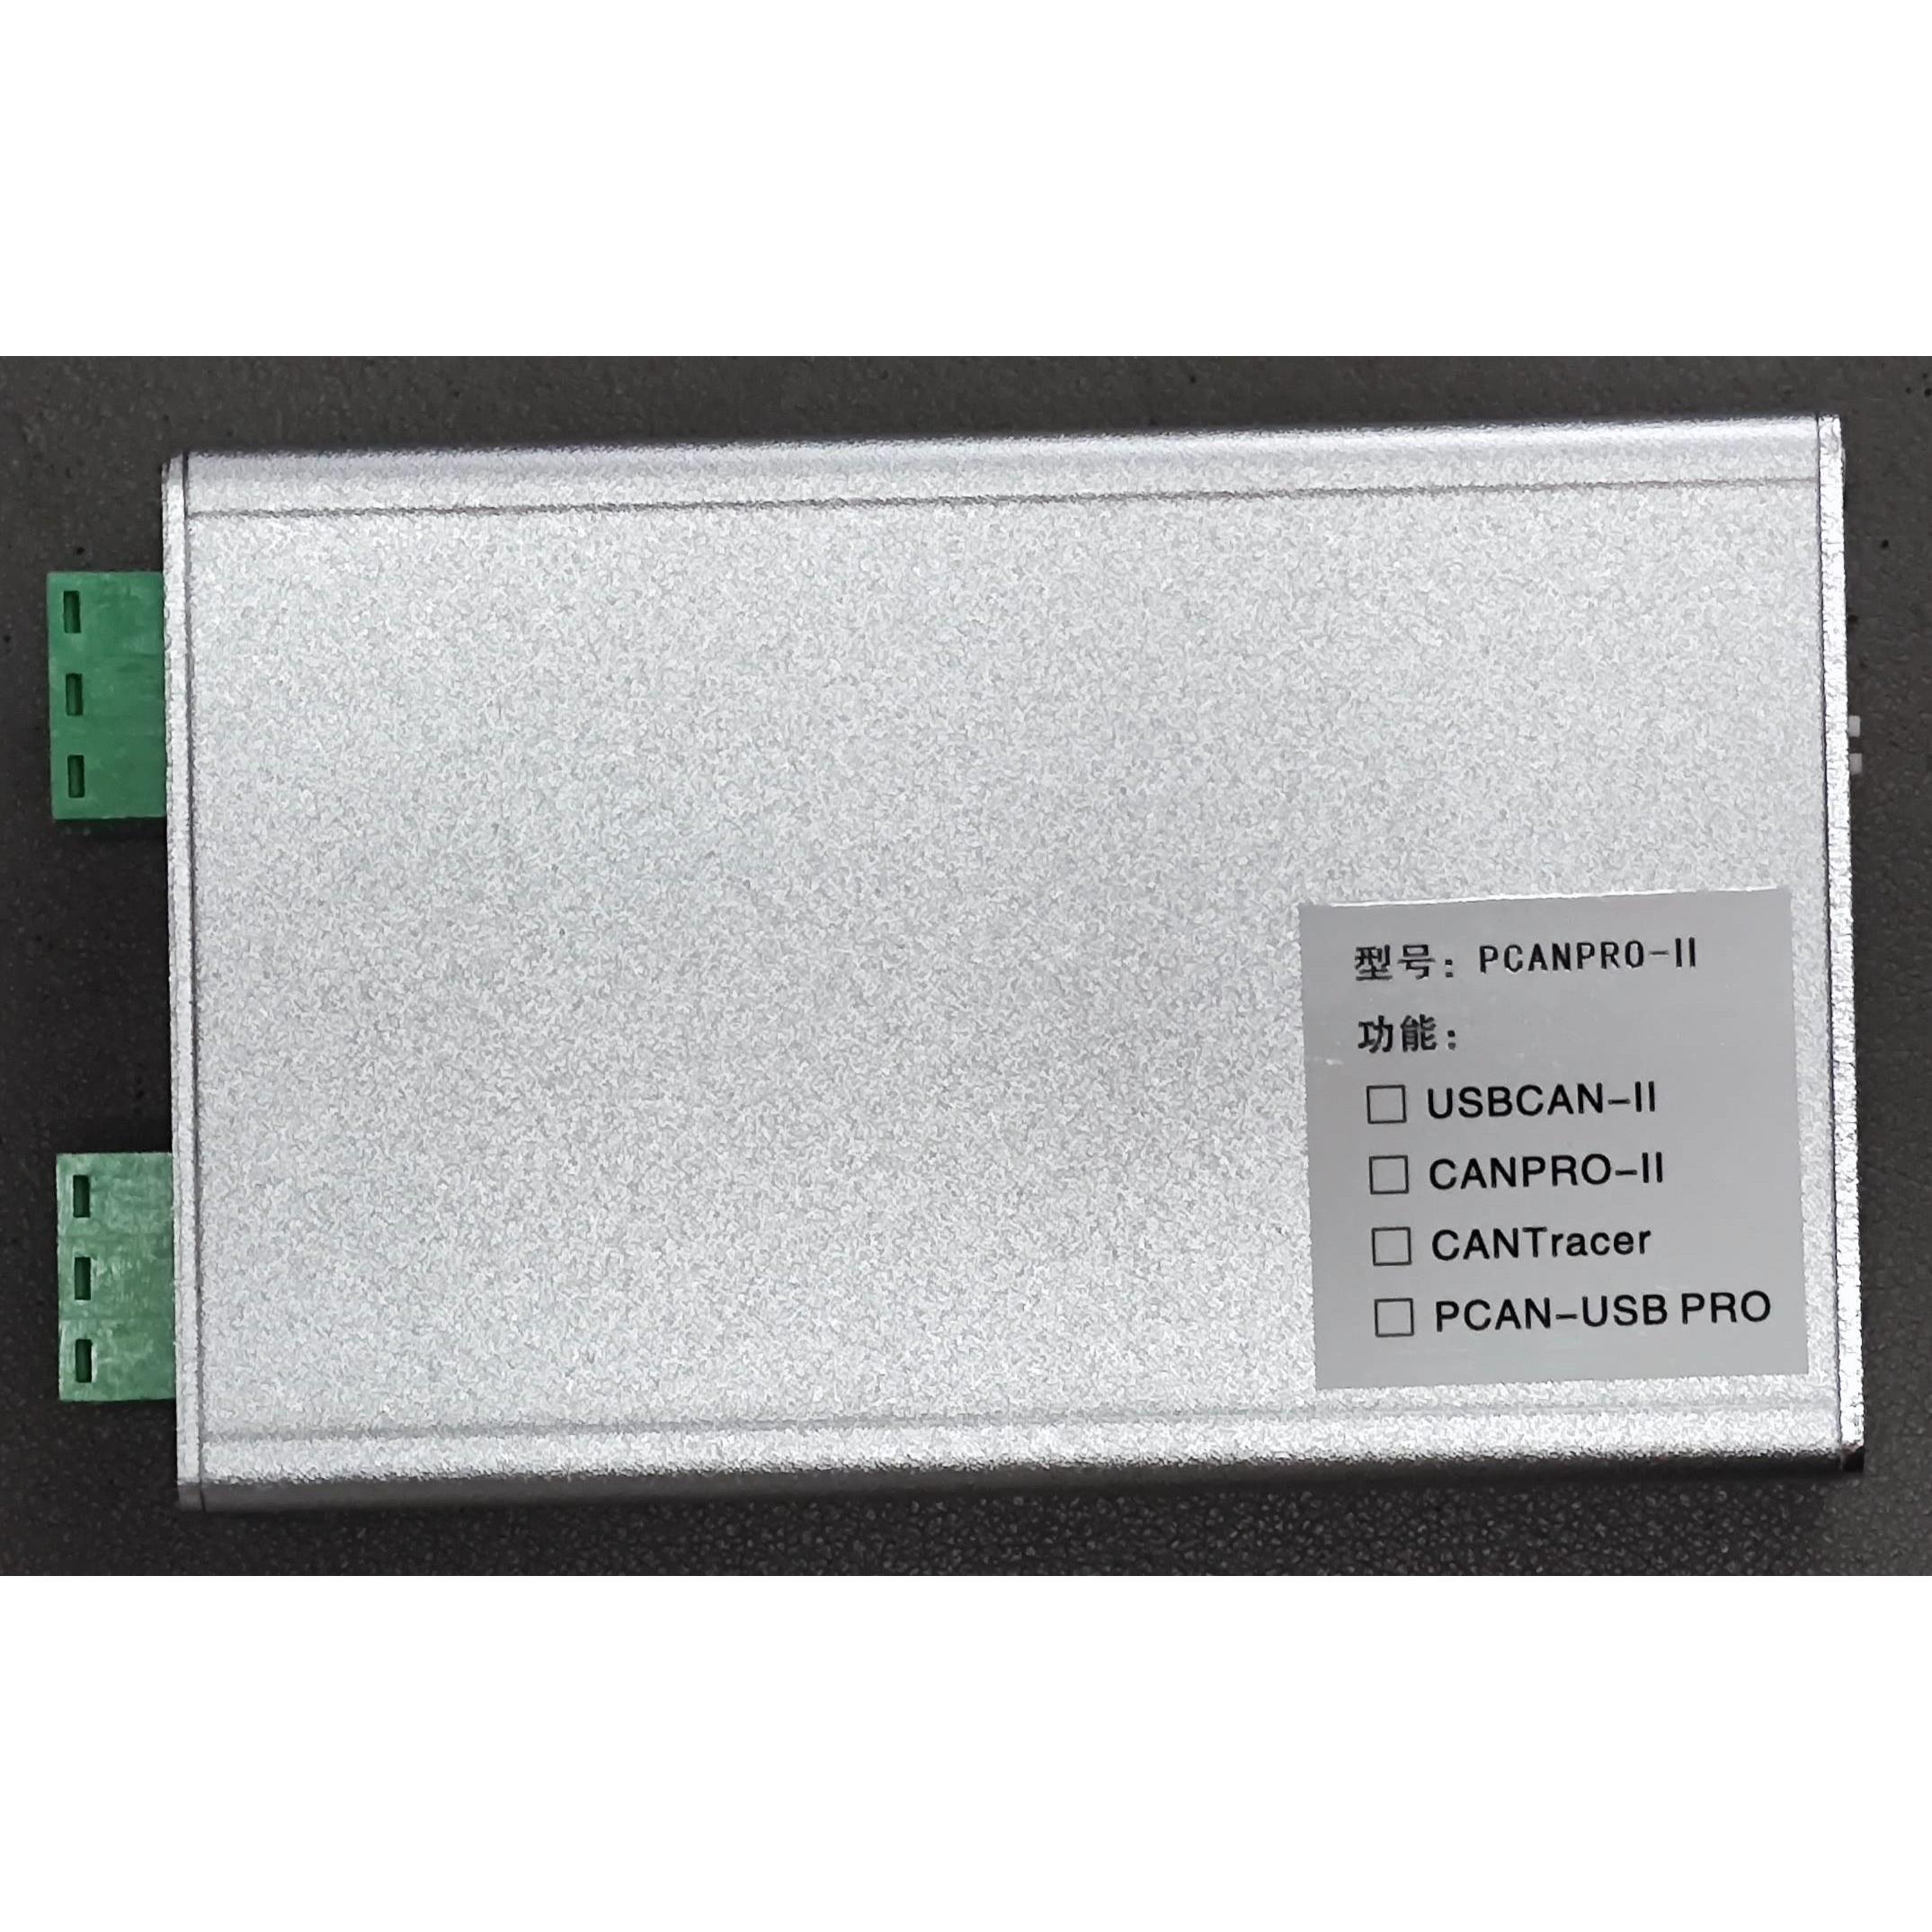 PCAN-USB Pro 2通道CAN (IPEH-002061 USBCAN-II分析仪 PCANPRO) 电子元器件市场 开发板/学习板/评估板/工控板 原图主图